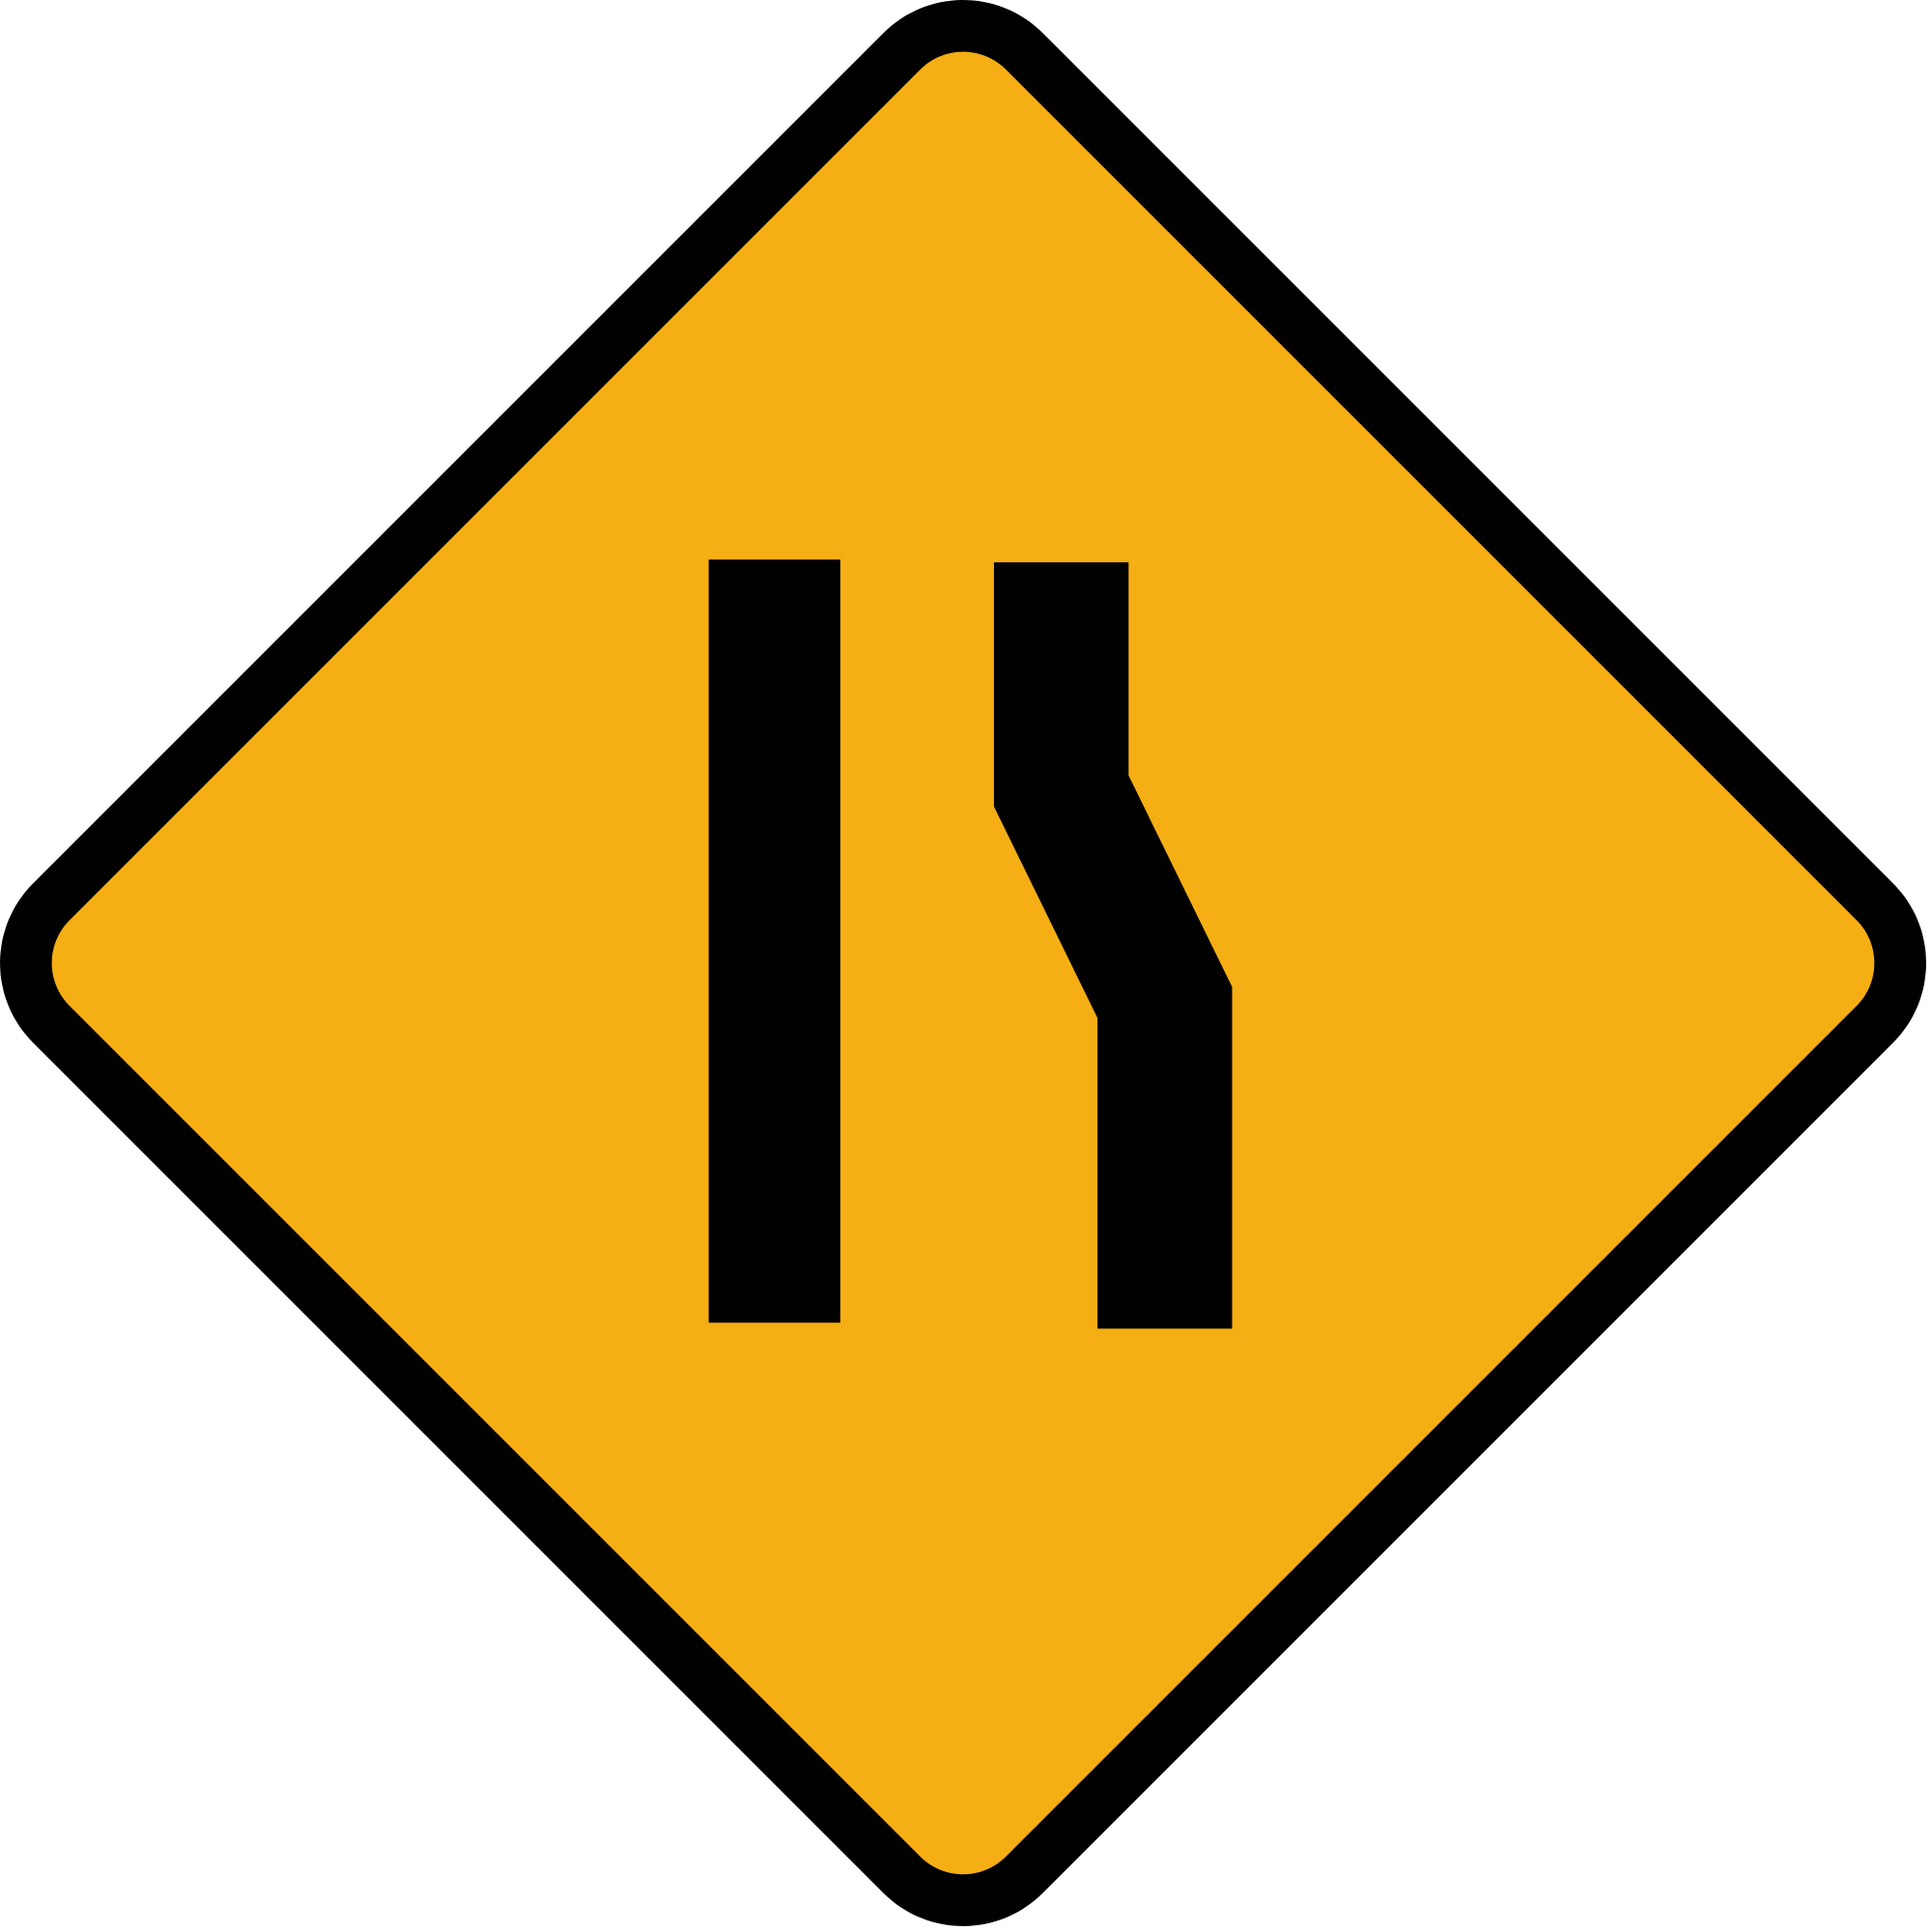 File:Diamond road sign road narrow right.svg